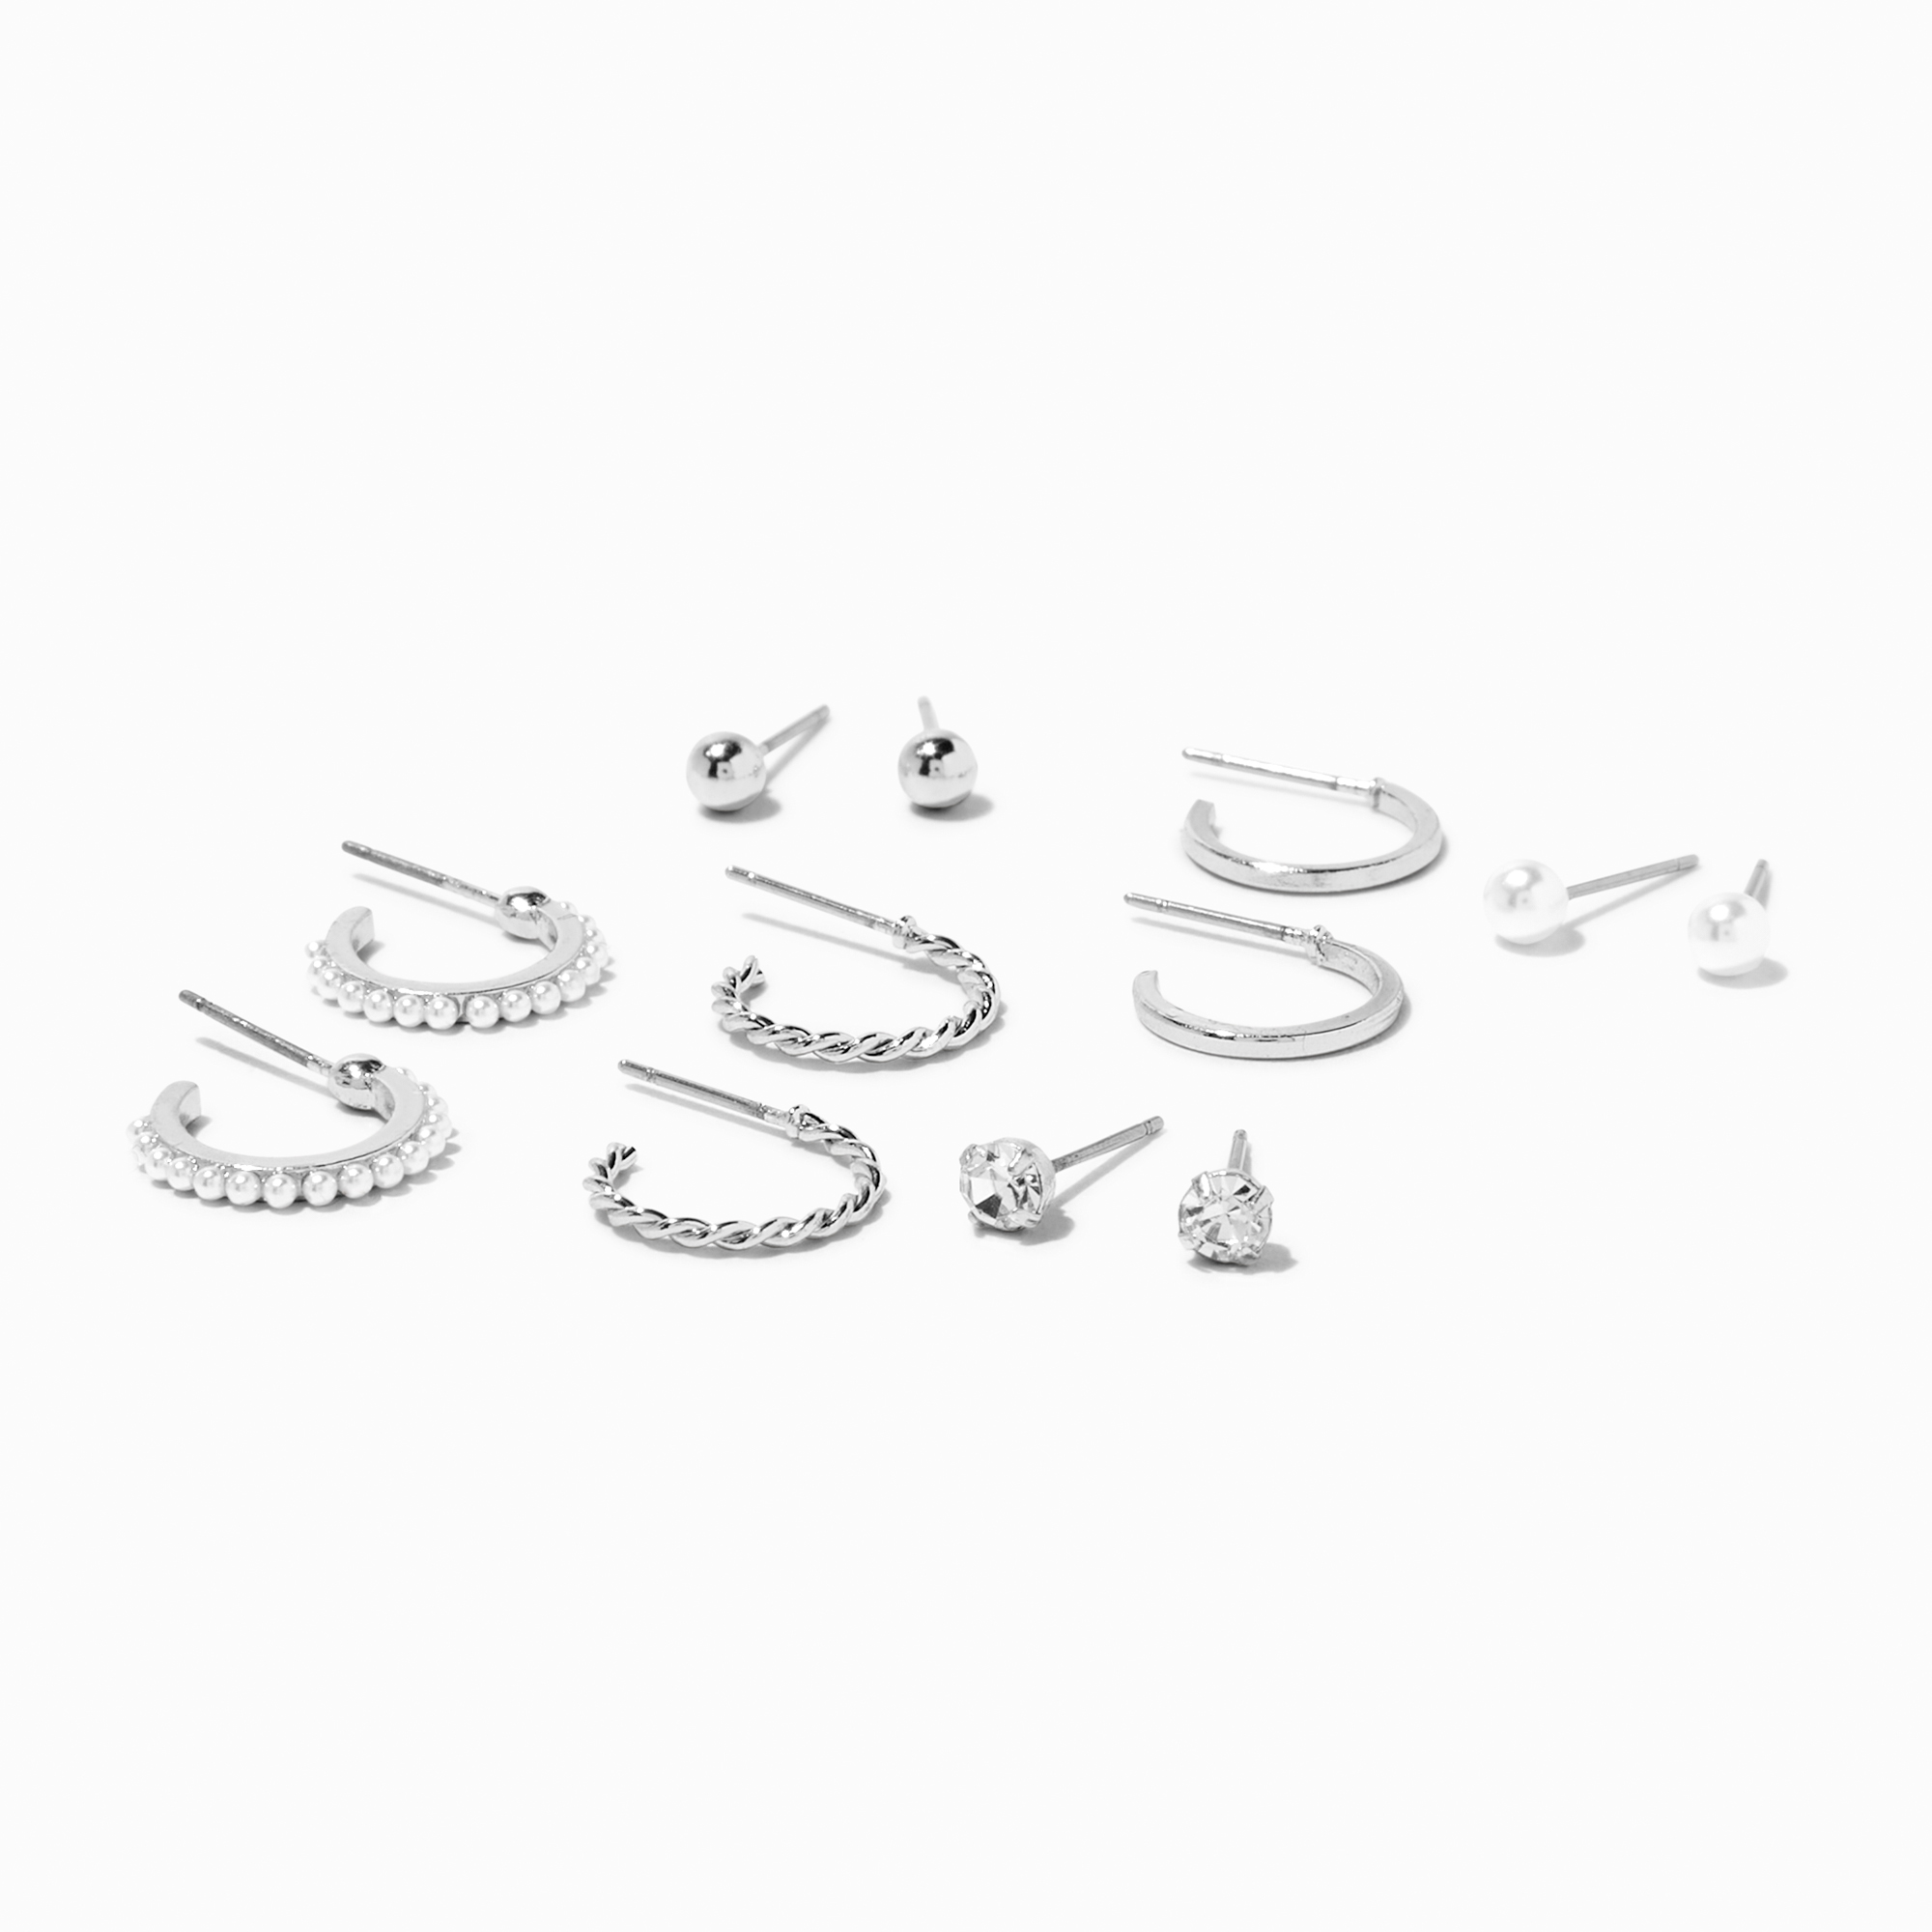 jewellery sets